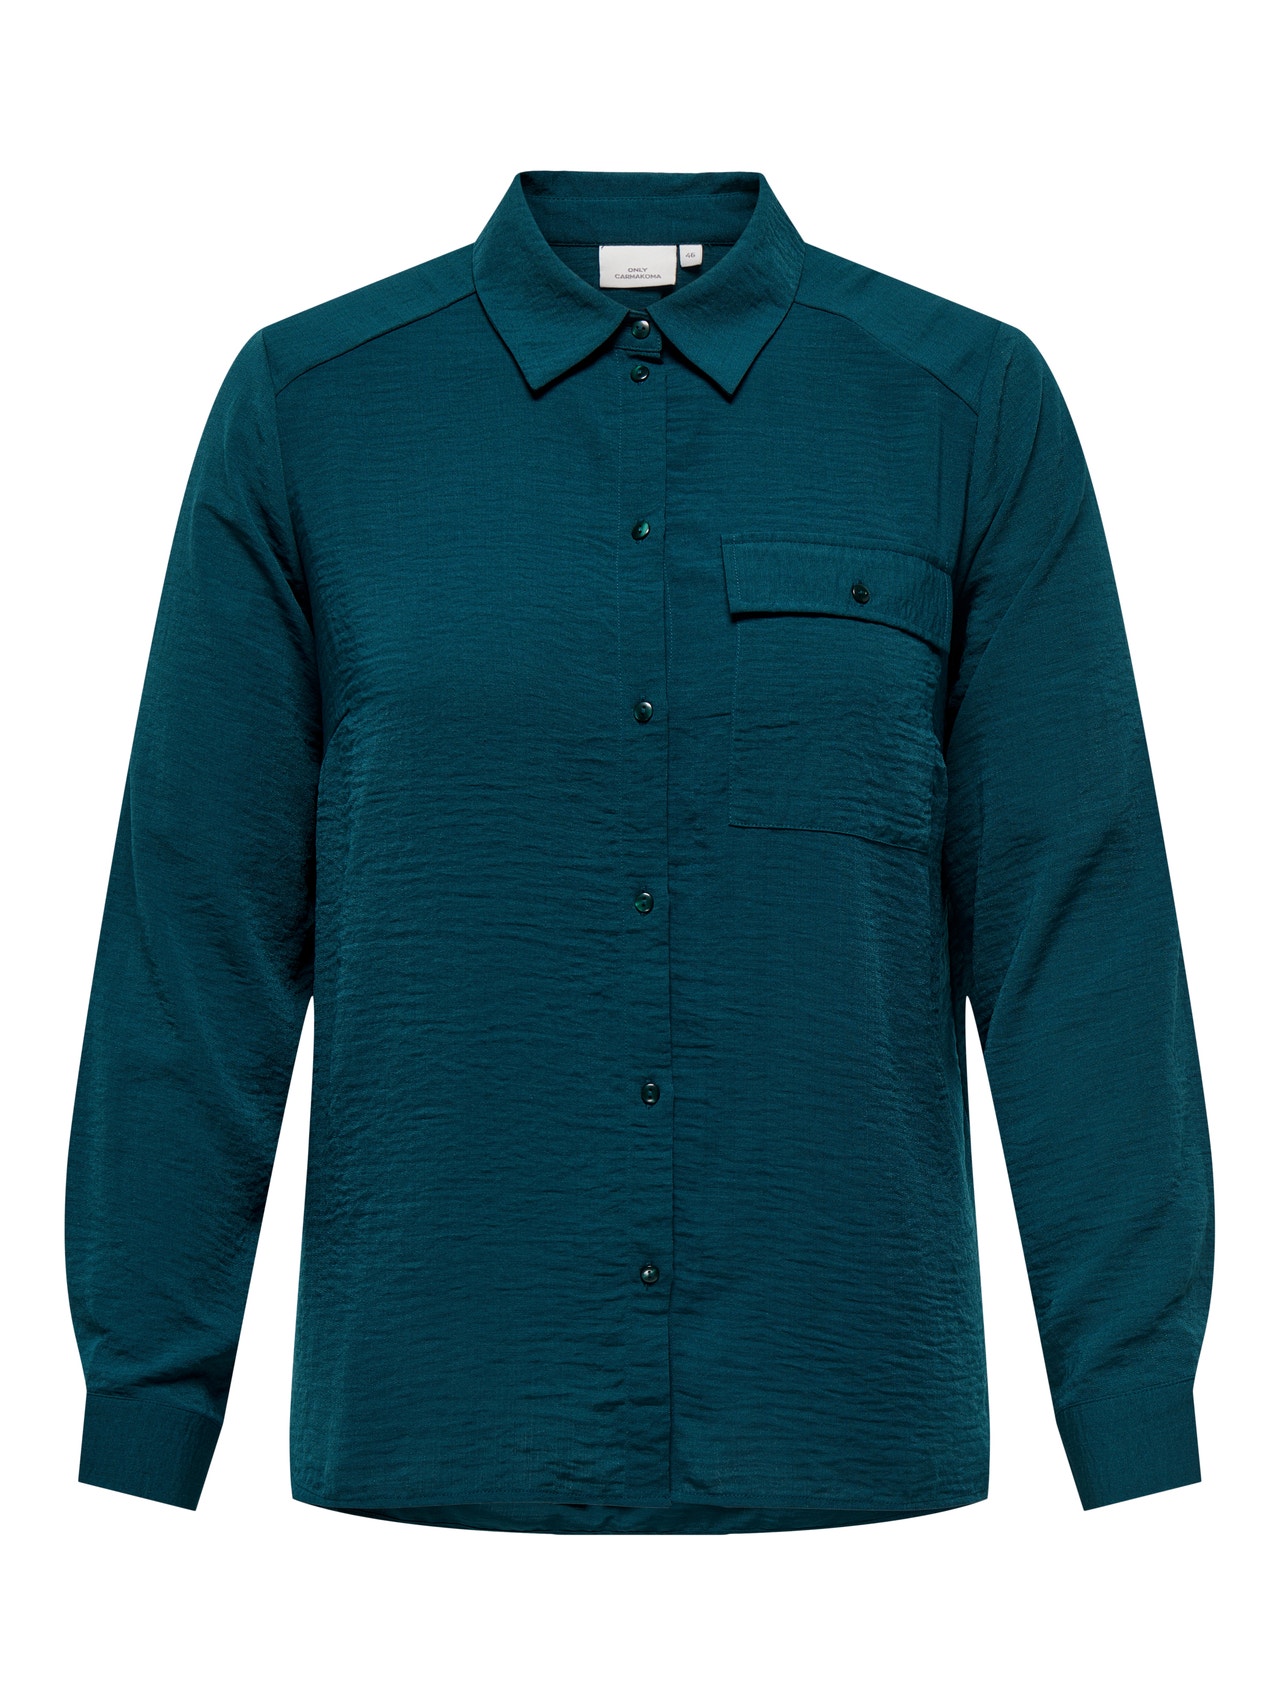 ONLY Curvy regular fit shirt -Reflecting Pond - 15335765